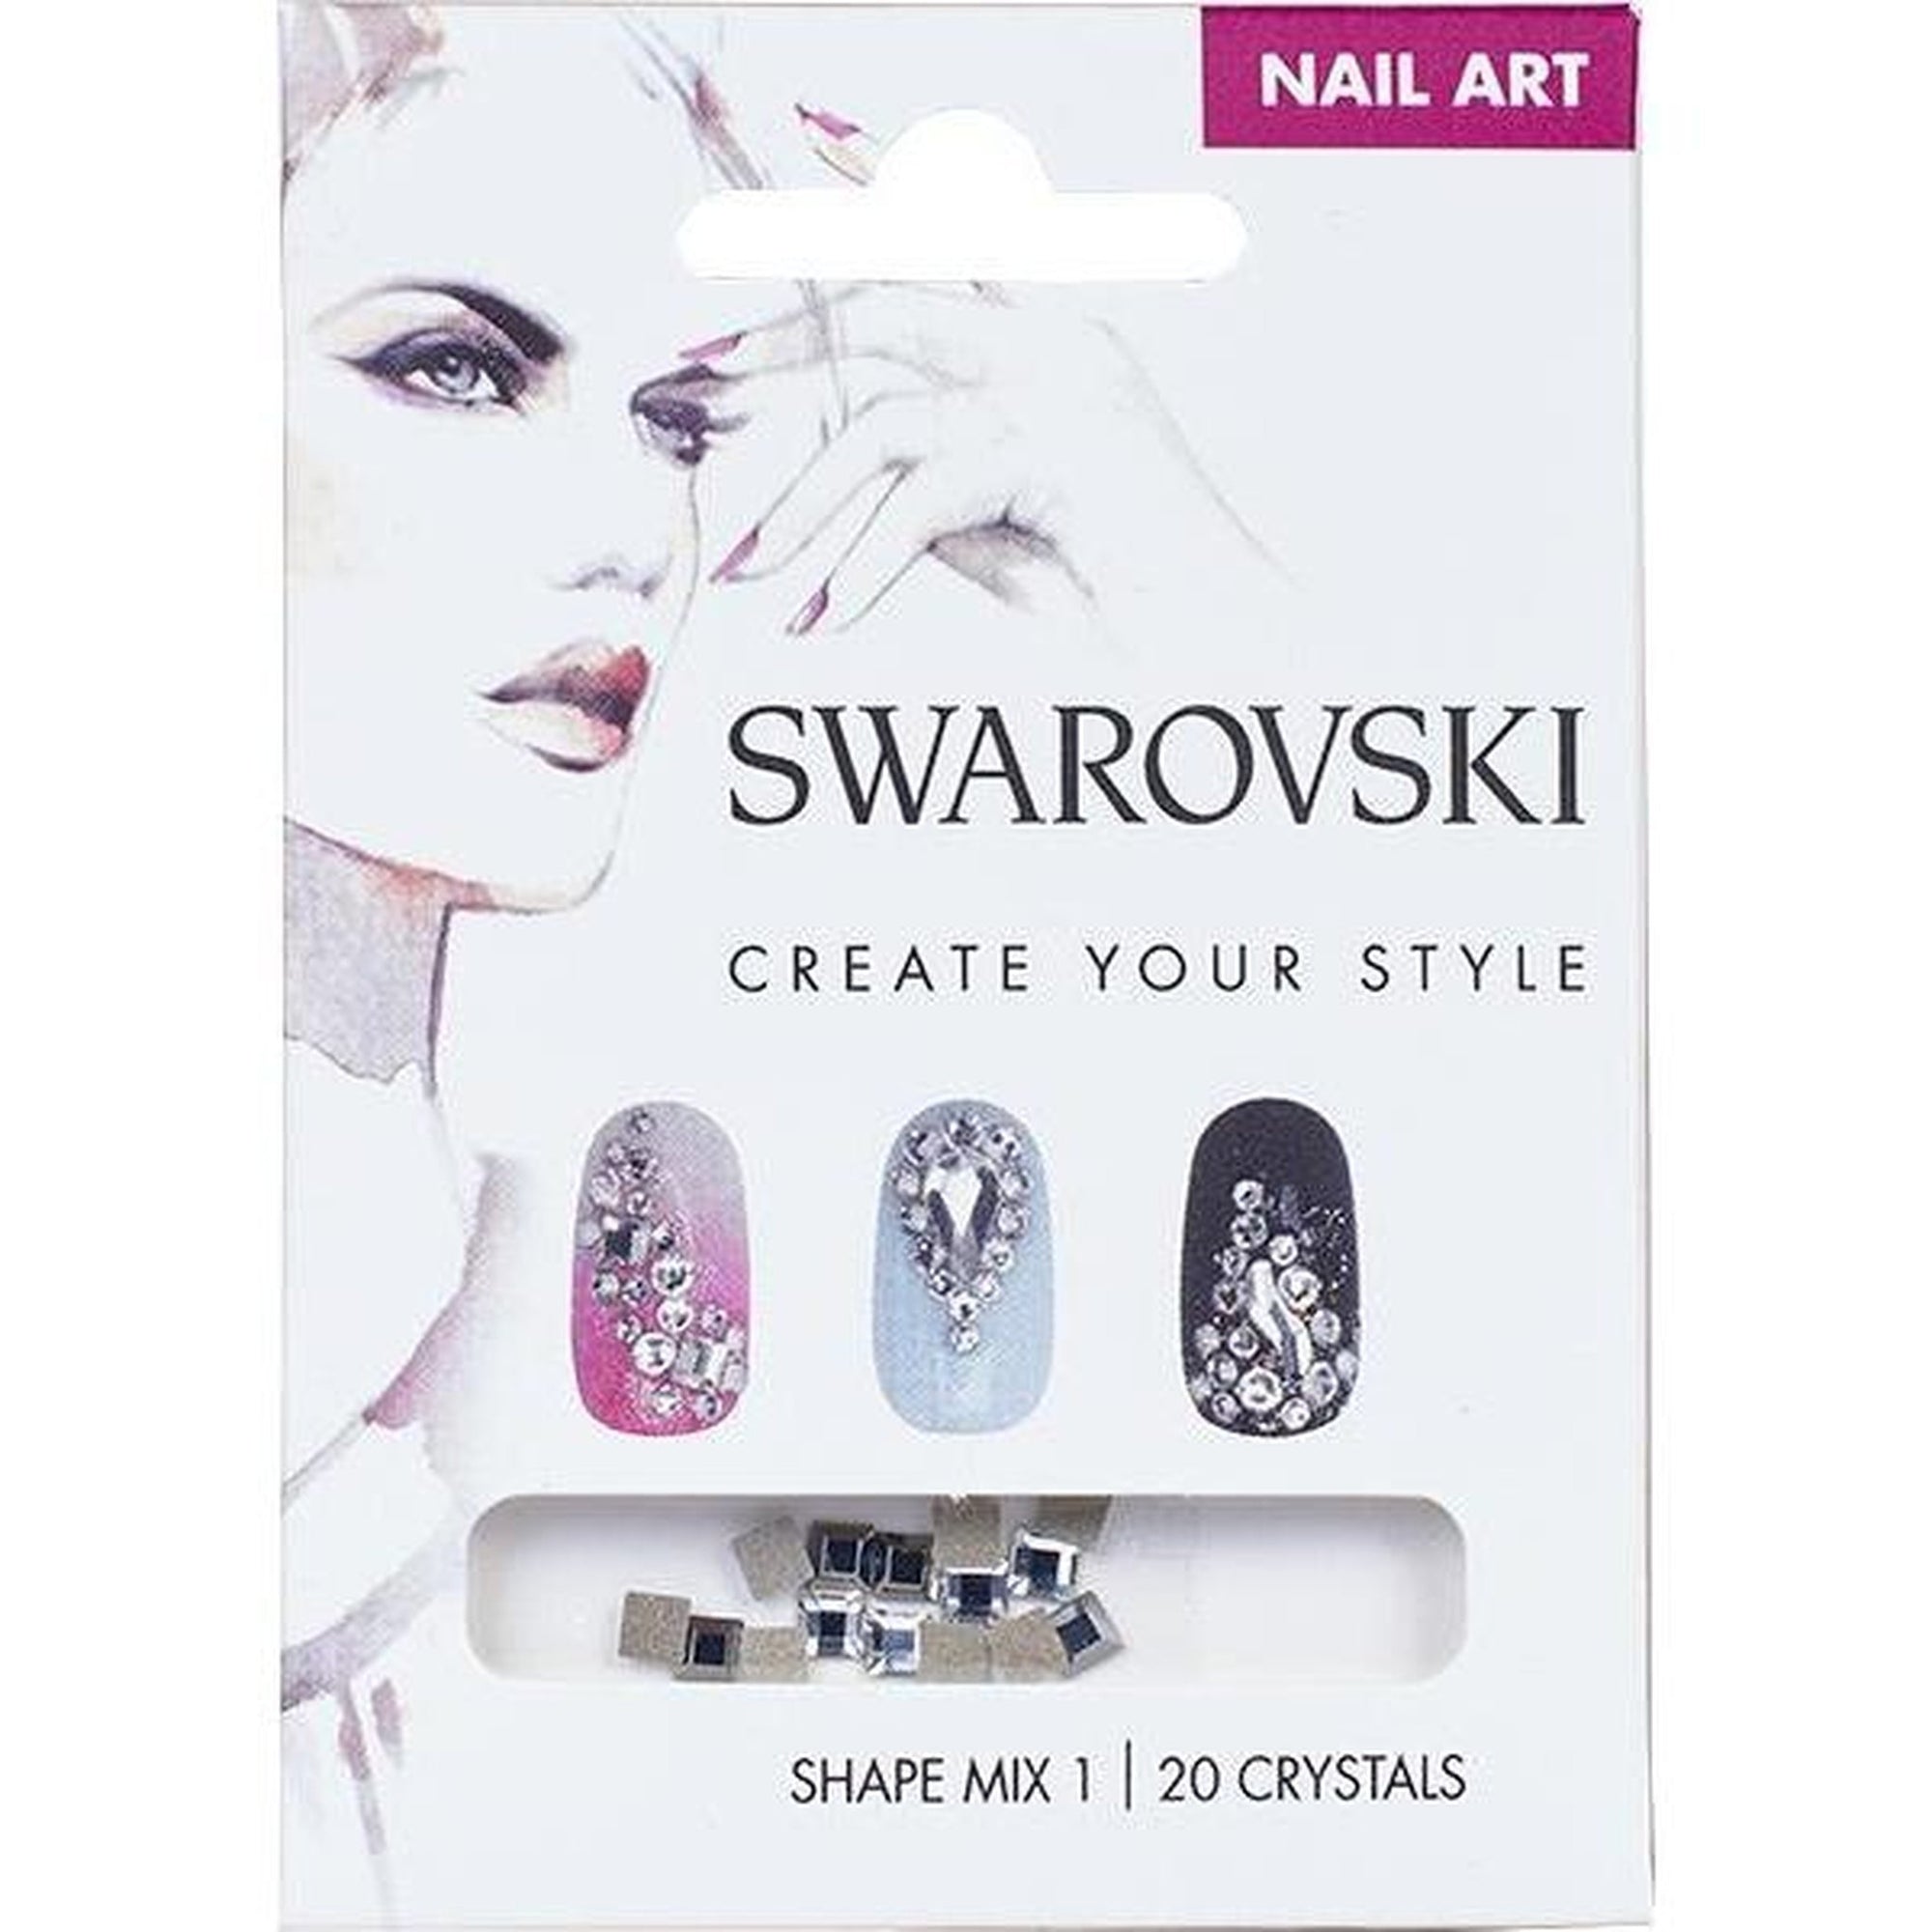 Swarovski Crystal – Nail Art Supplies